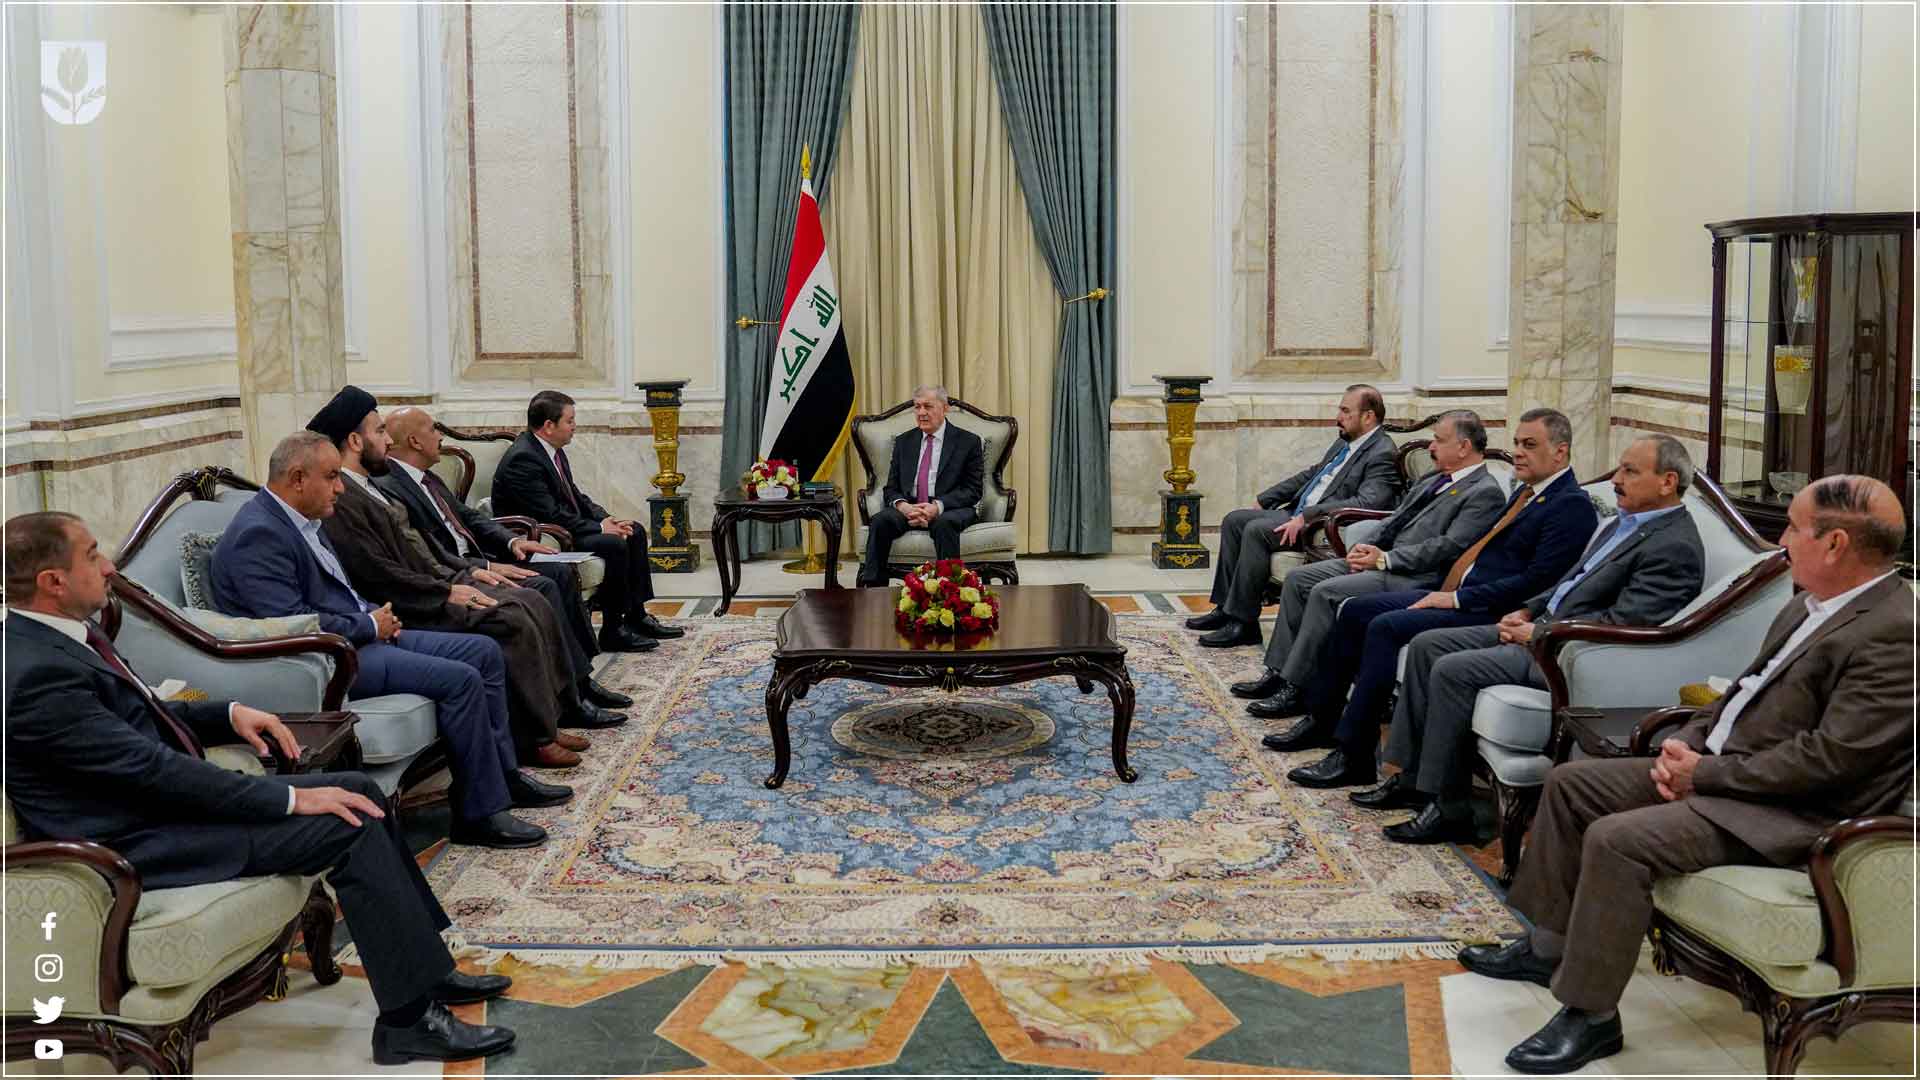  Iraqi President met a delegation including the Yazidis' Representative at Salam Palace. Credit: Iraqi President